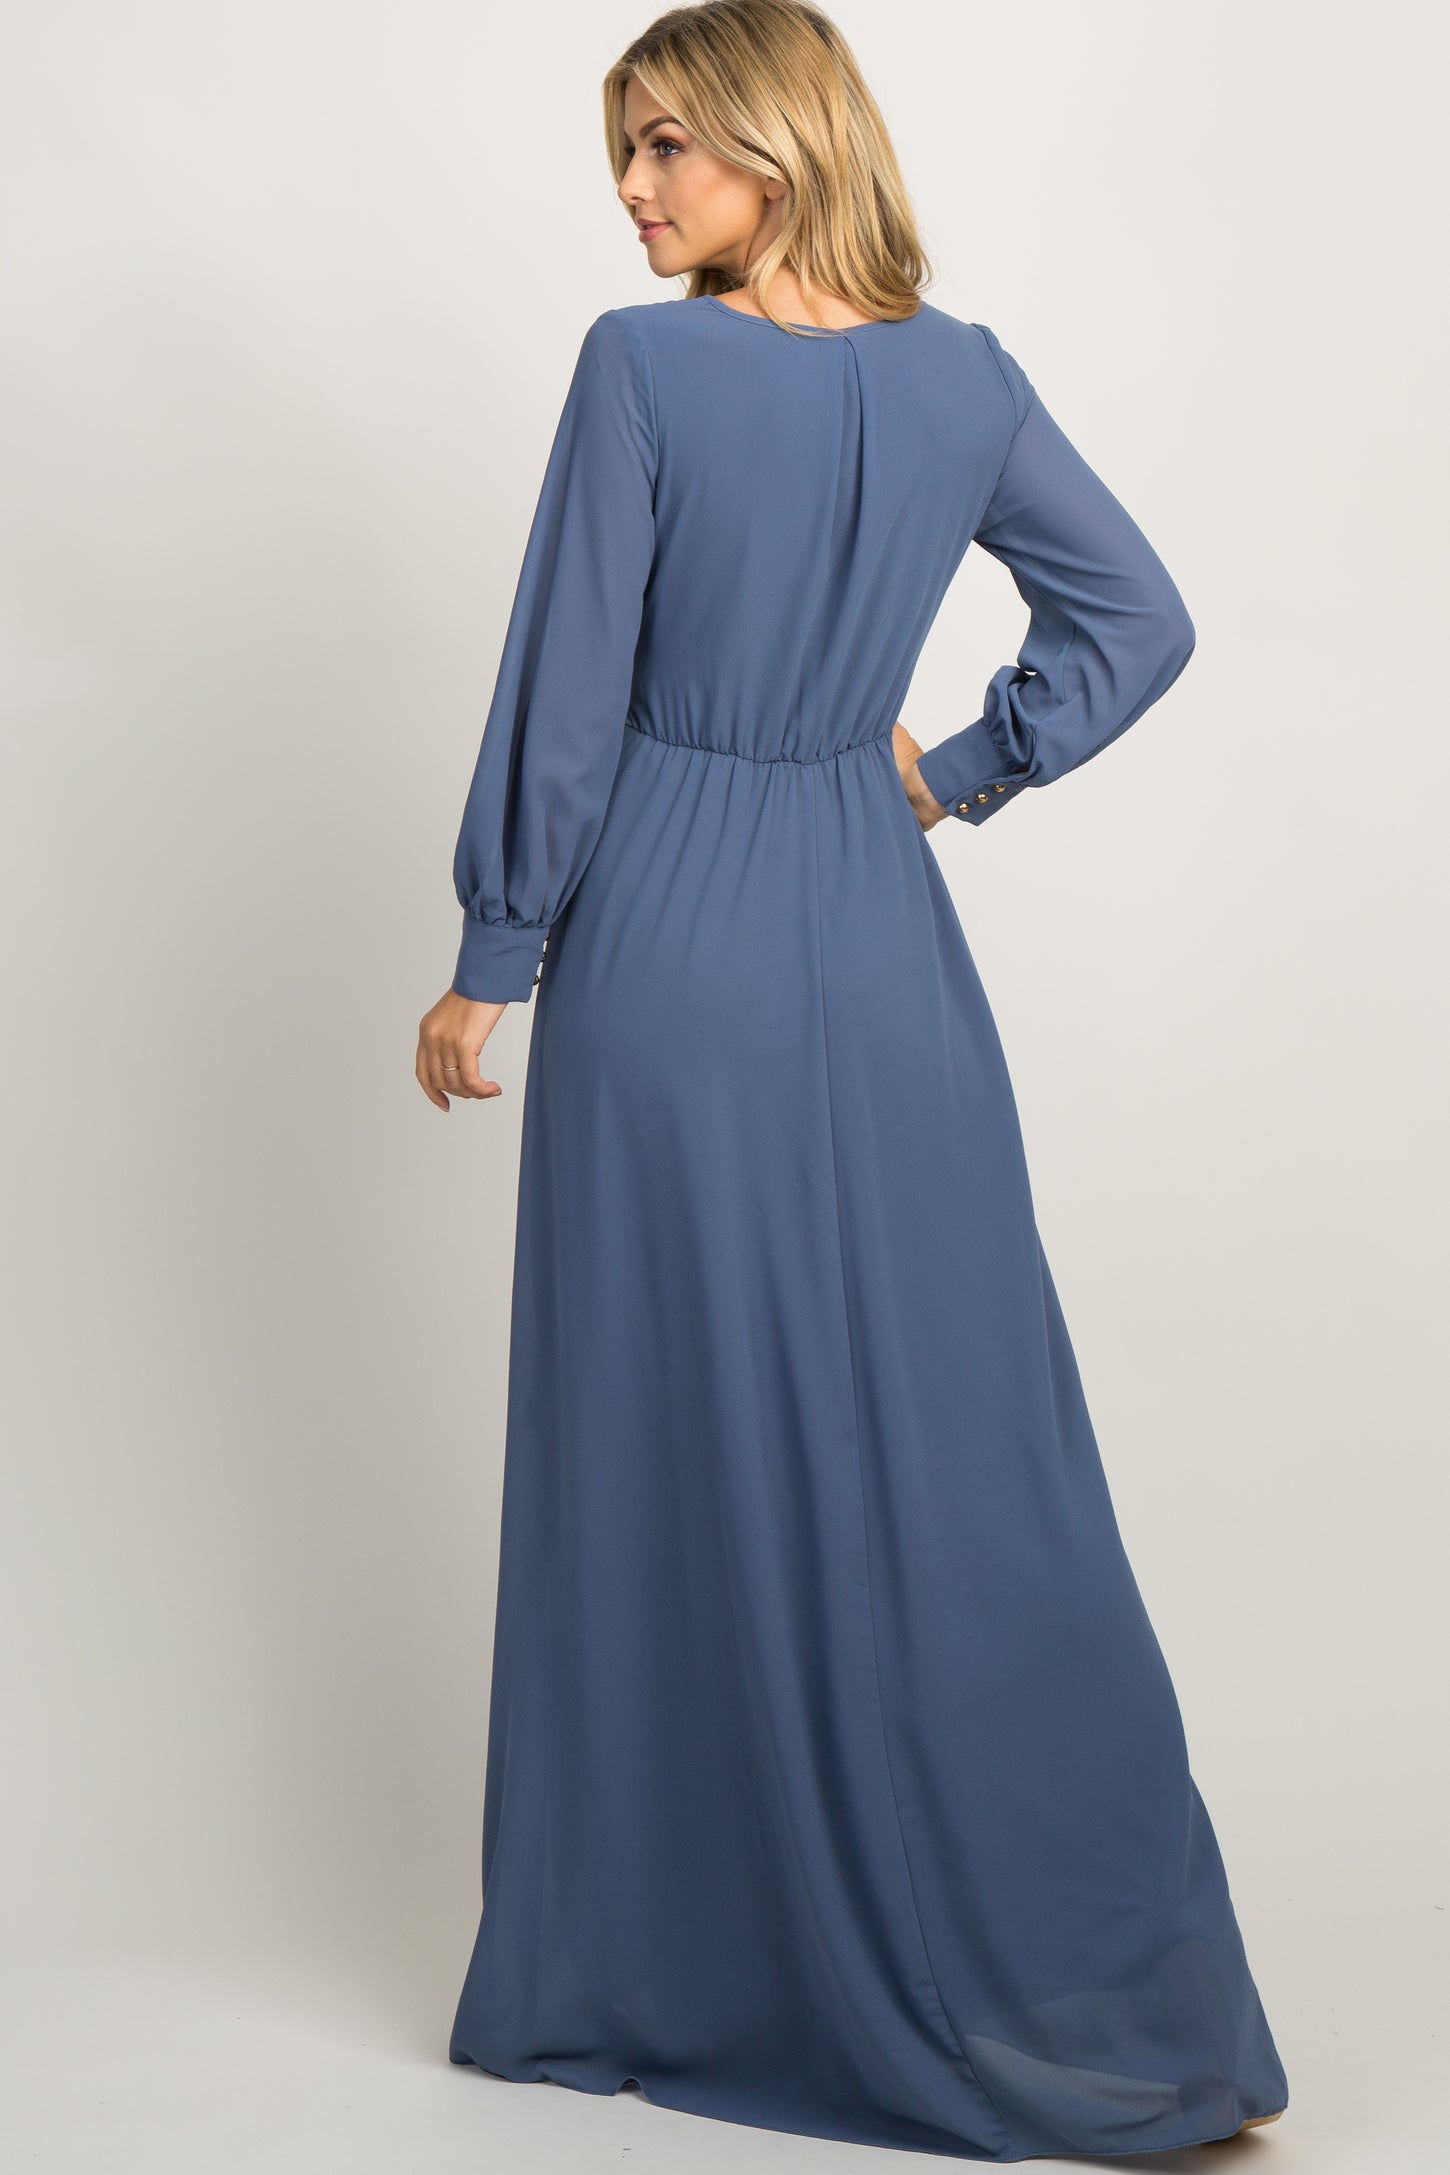 Blue Chiffon Long Sleeve Pleated Maxi Dress